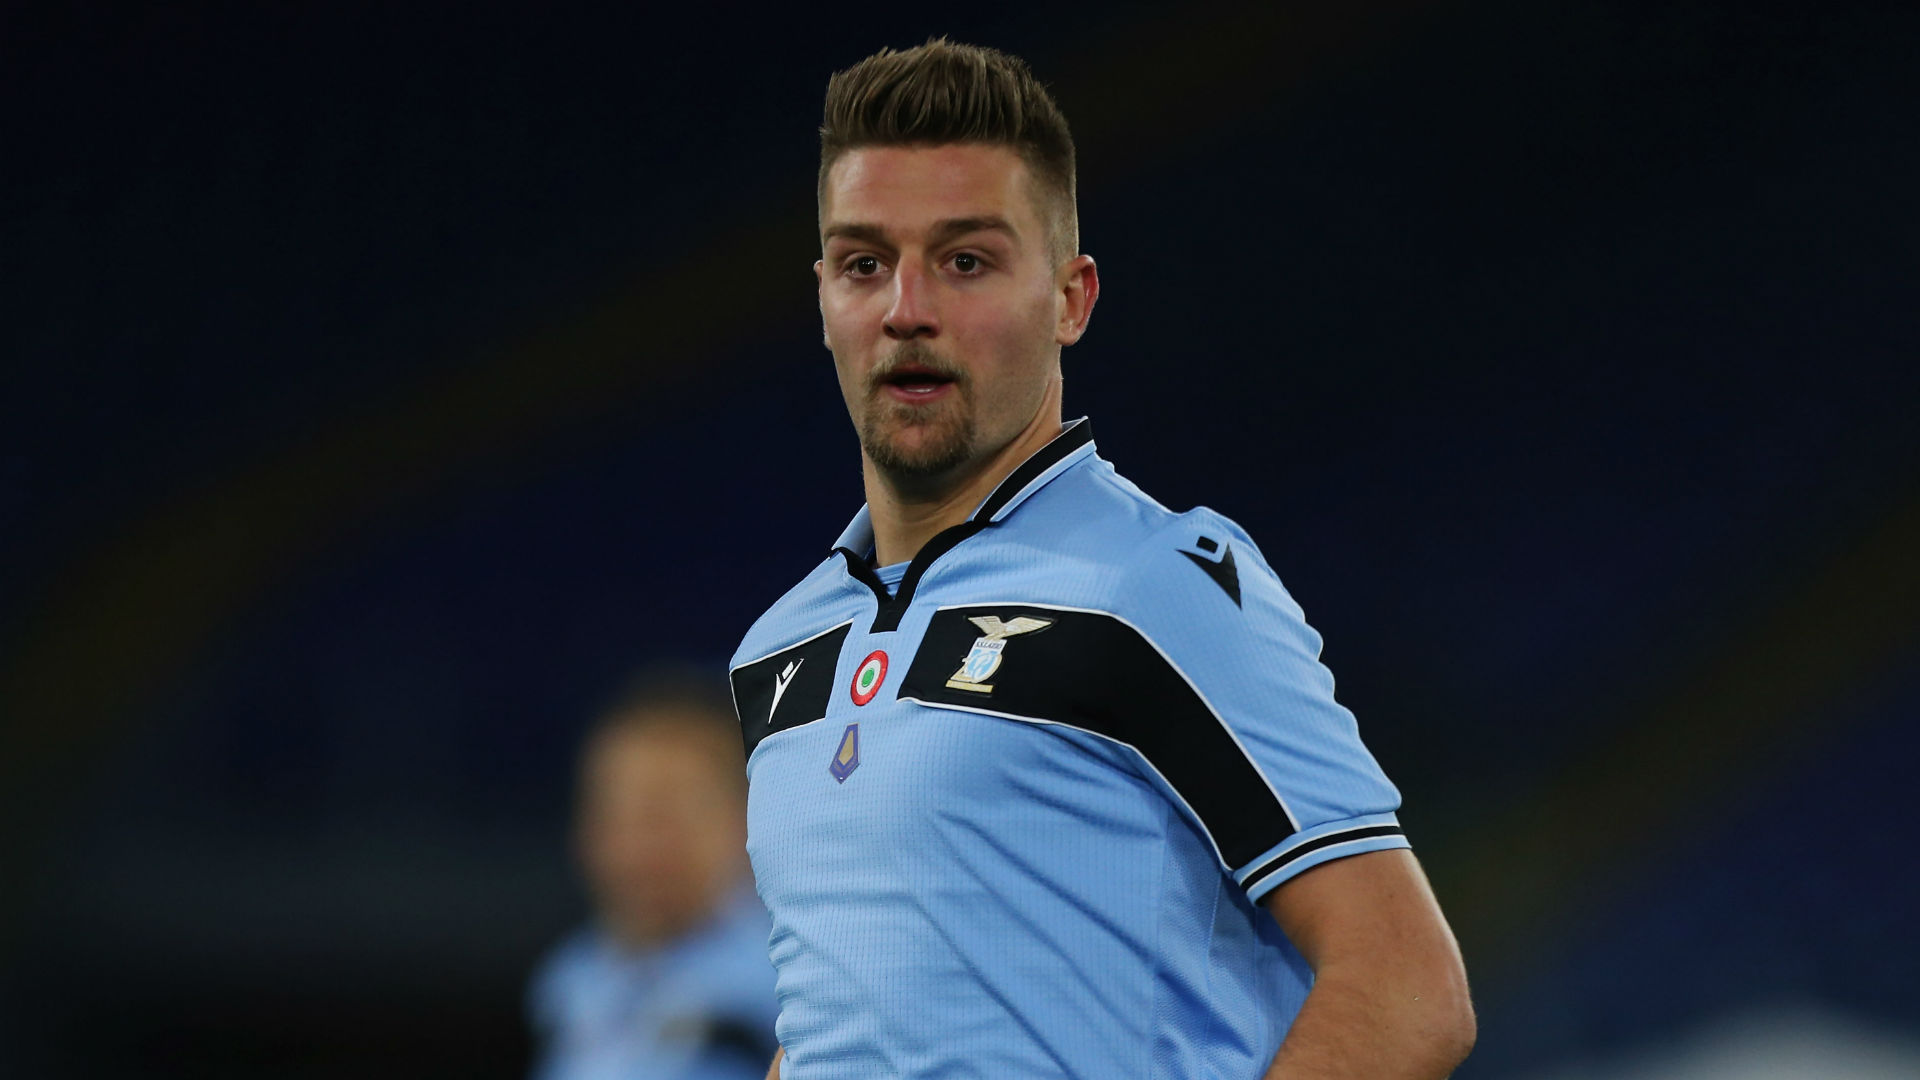 Lazio will listen to offers for Man Utd target Milinkovic-Savic but price won't drop, says Tare